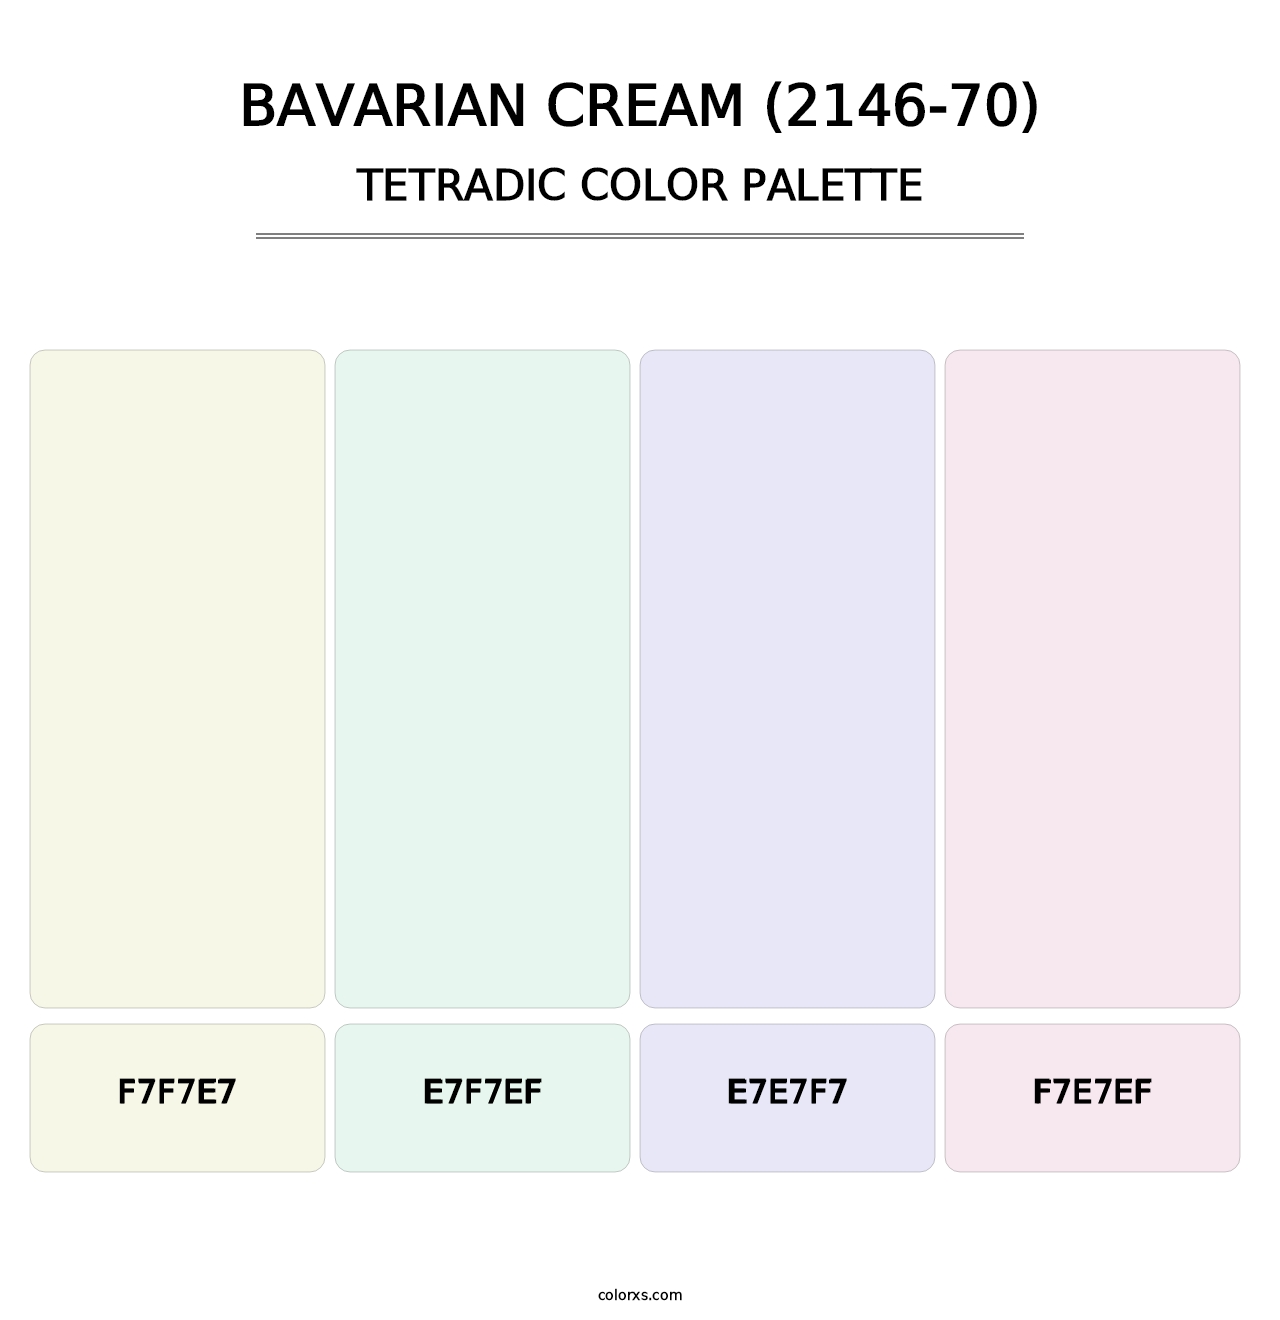 Bavarian Cream (2146-70) - Tetradic Color Palette